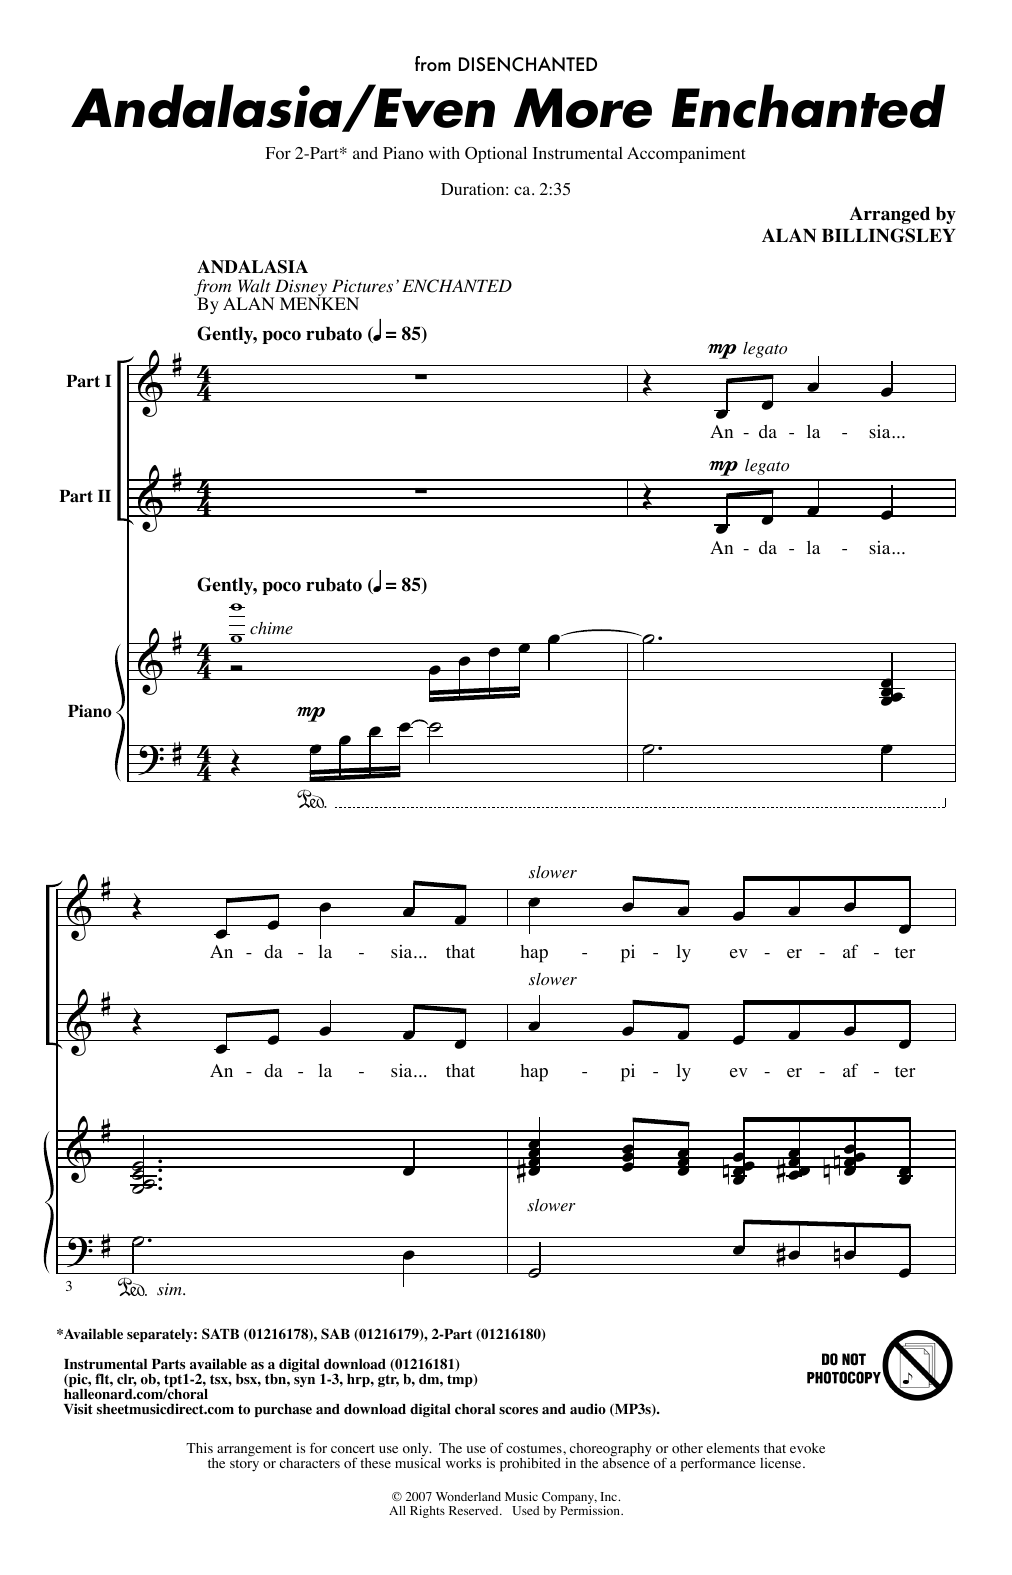 Alan Menken Andalasia / Even More Enchanted (arr. Alan Billingsley) Sheet Music Notes & Chords for SAB Choir - Download or Print PDF